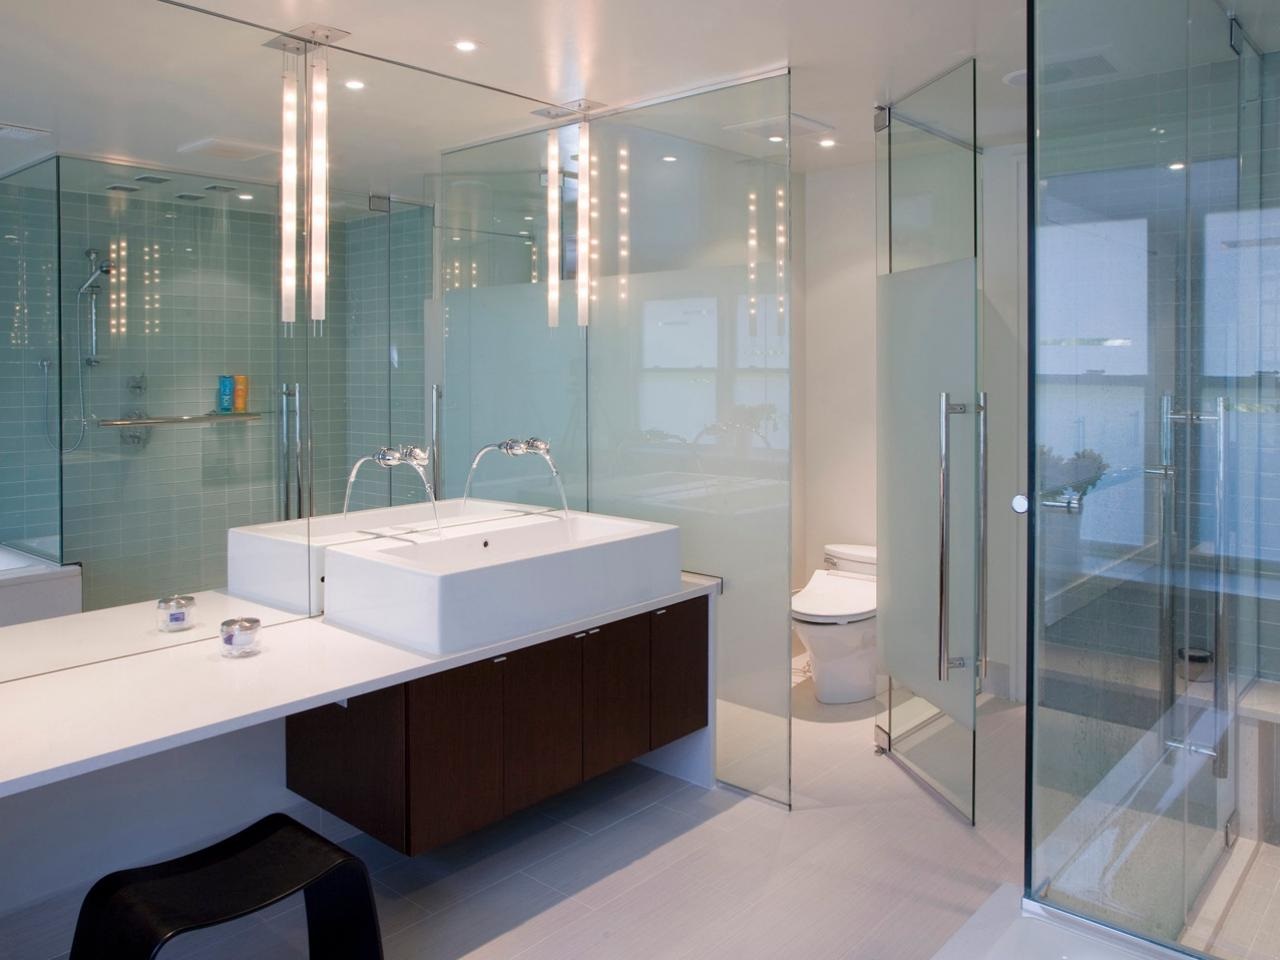 7 Quick Tips to Organize your Bathroom Vanity